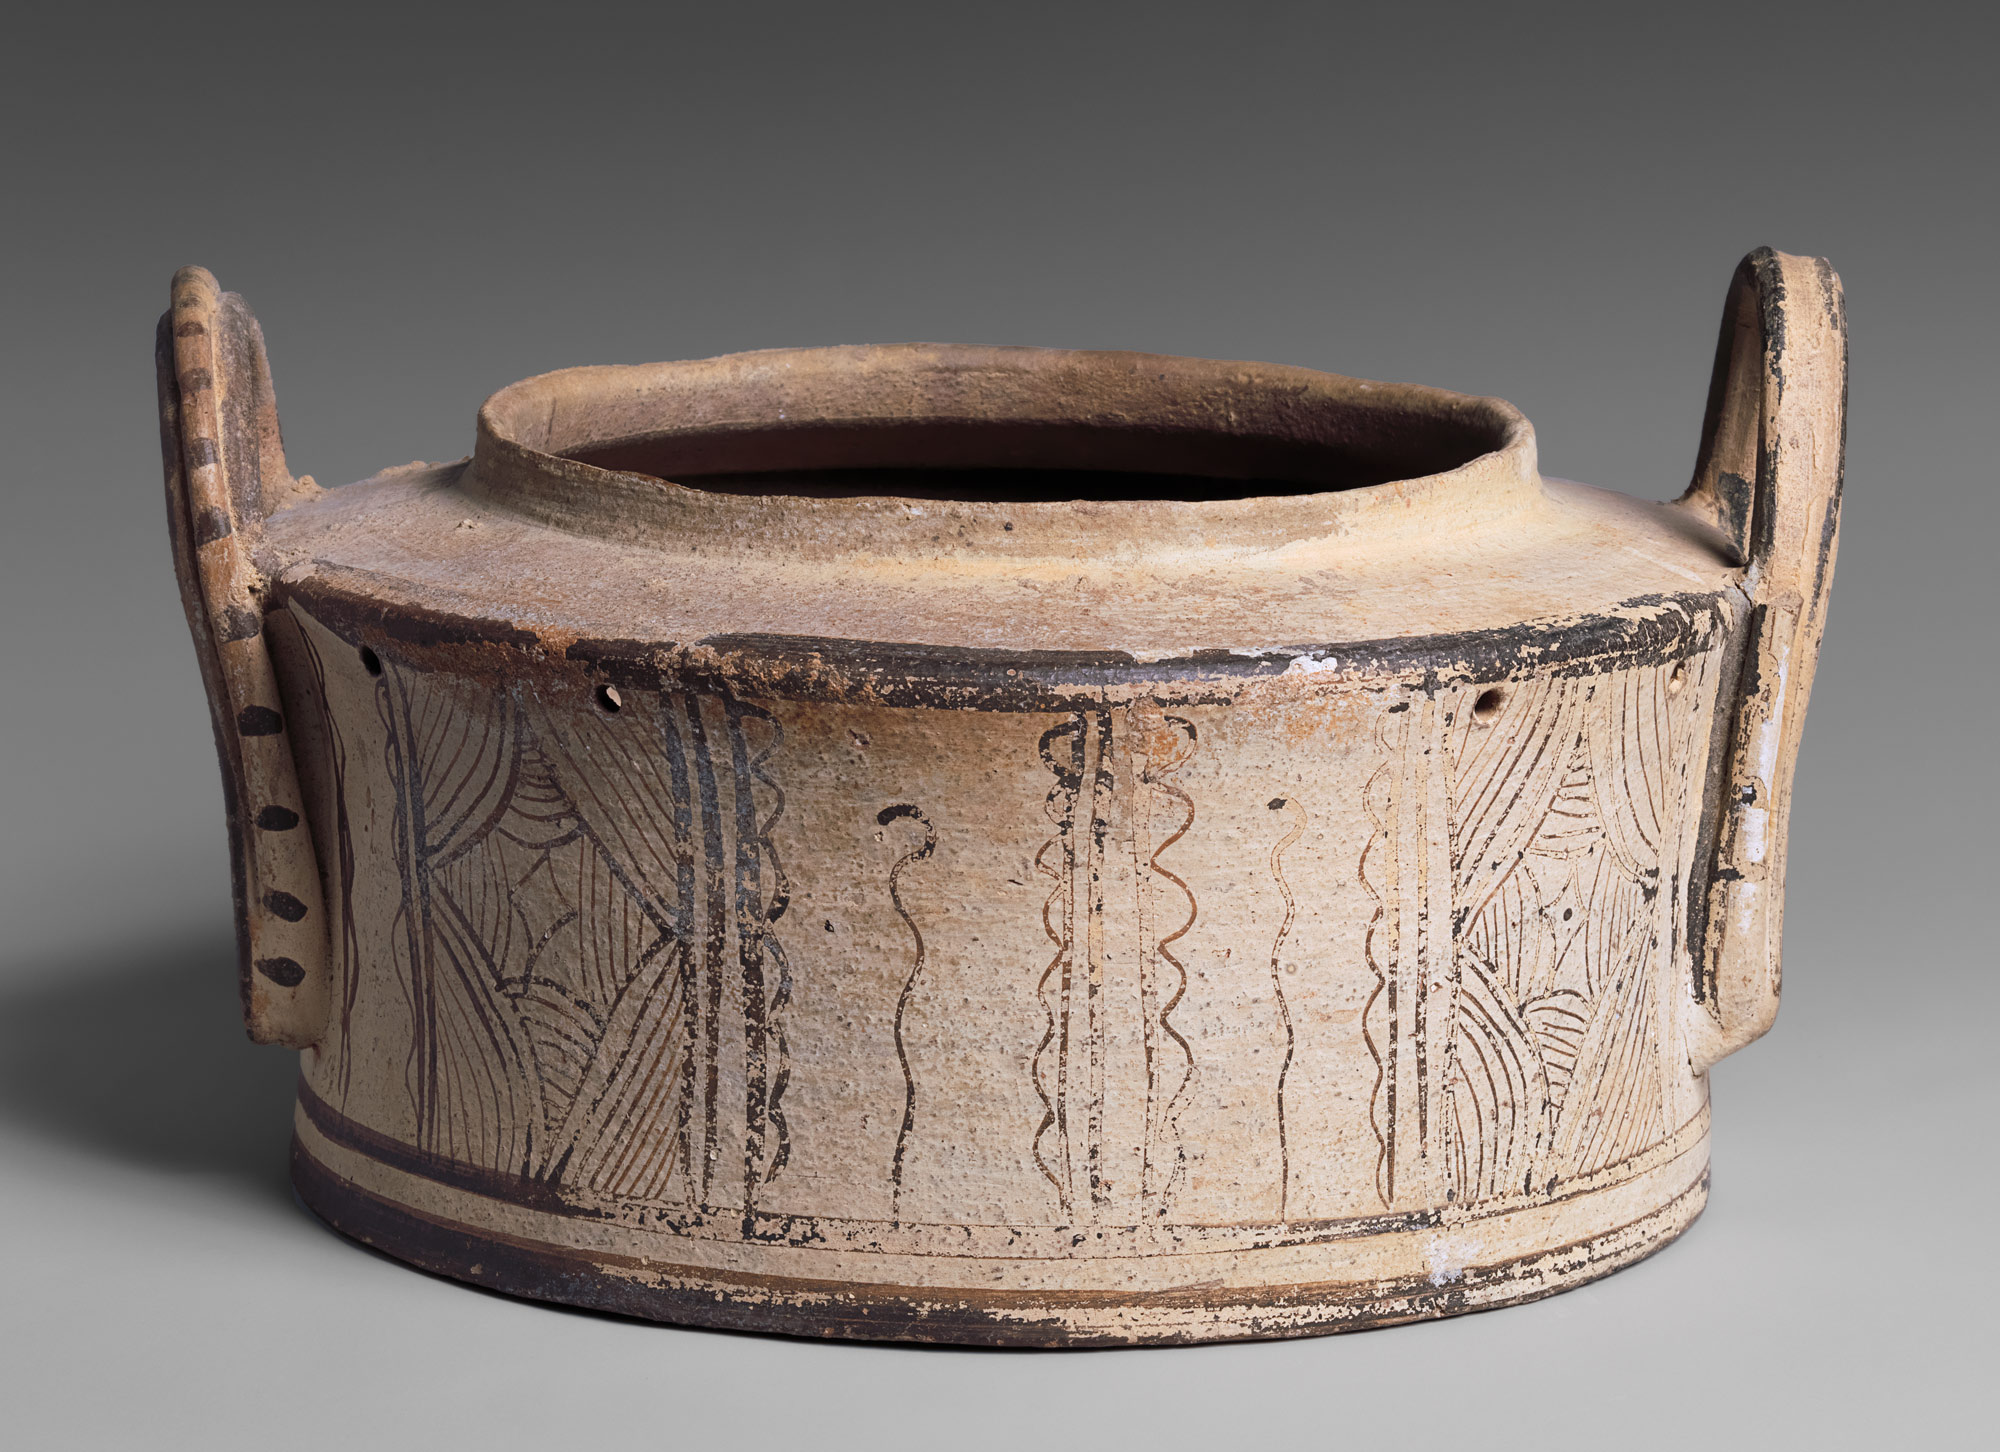 Terracotta pyxis (cylindrical box)